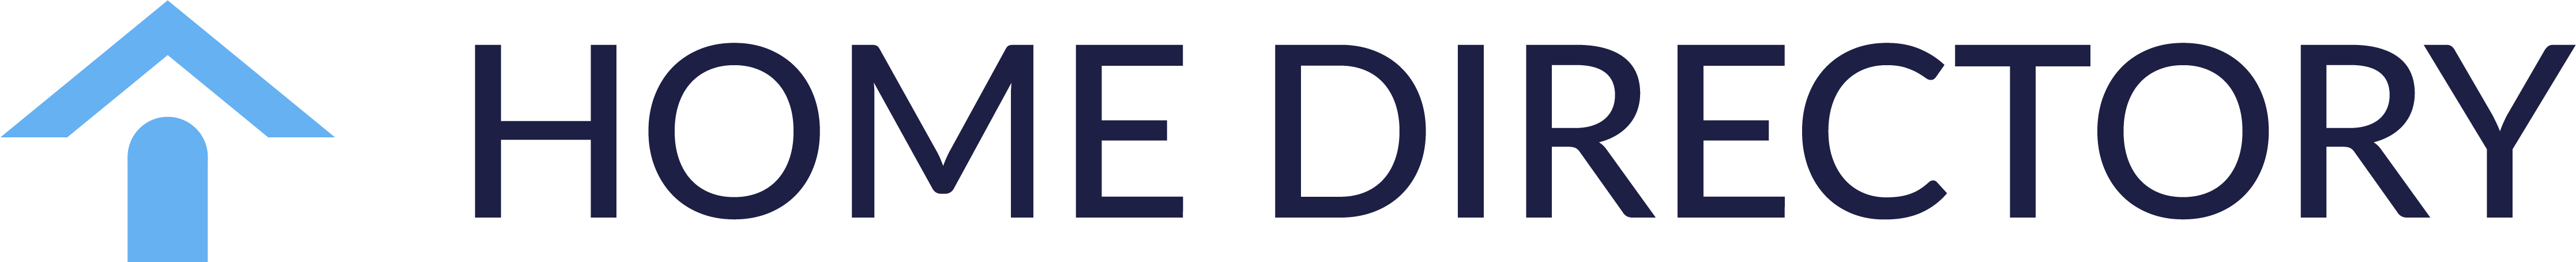 Home Directory Logo